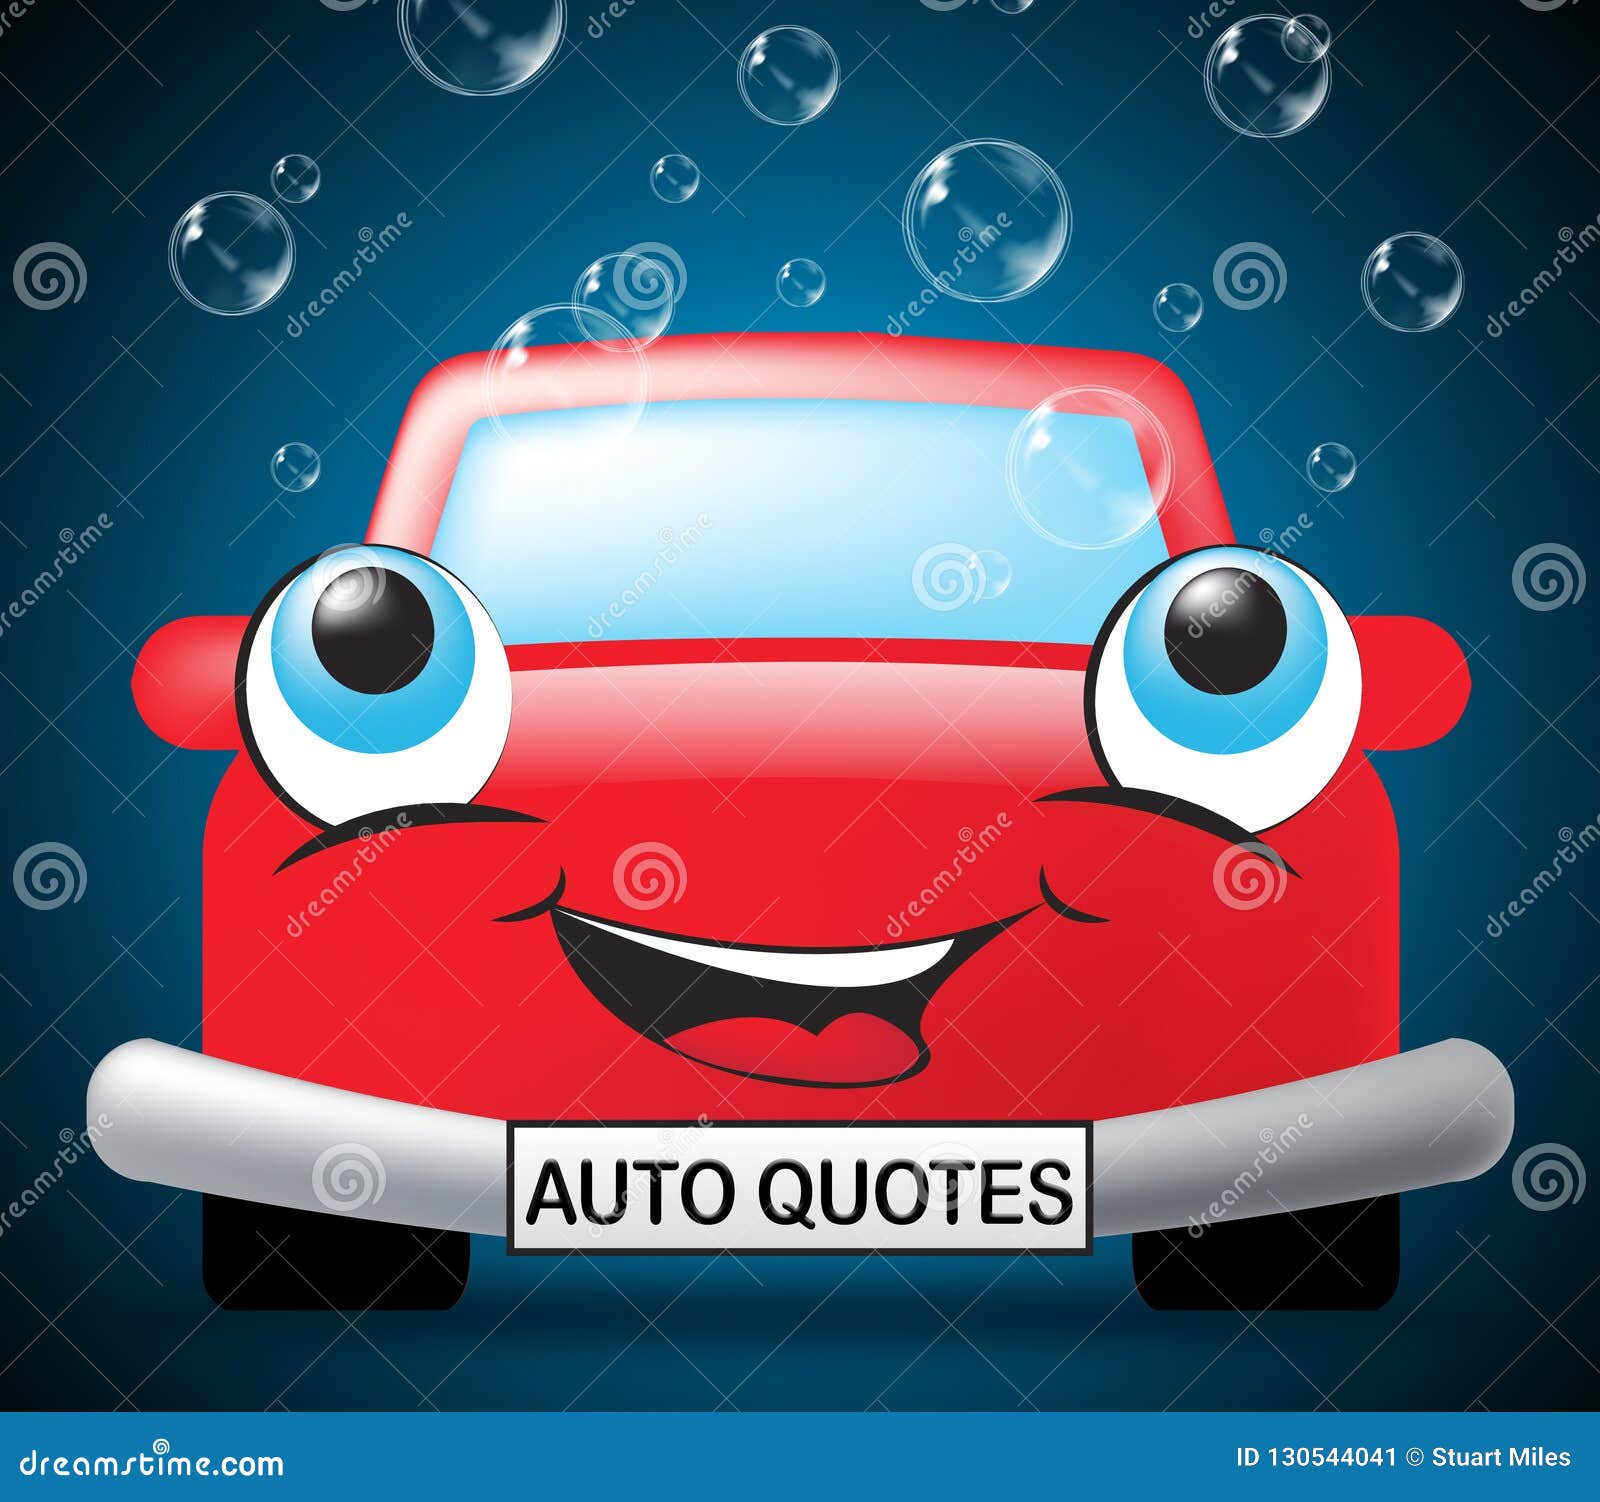 Auto Quotes Means Car Insurance 3d Illustration Stock ...